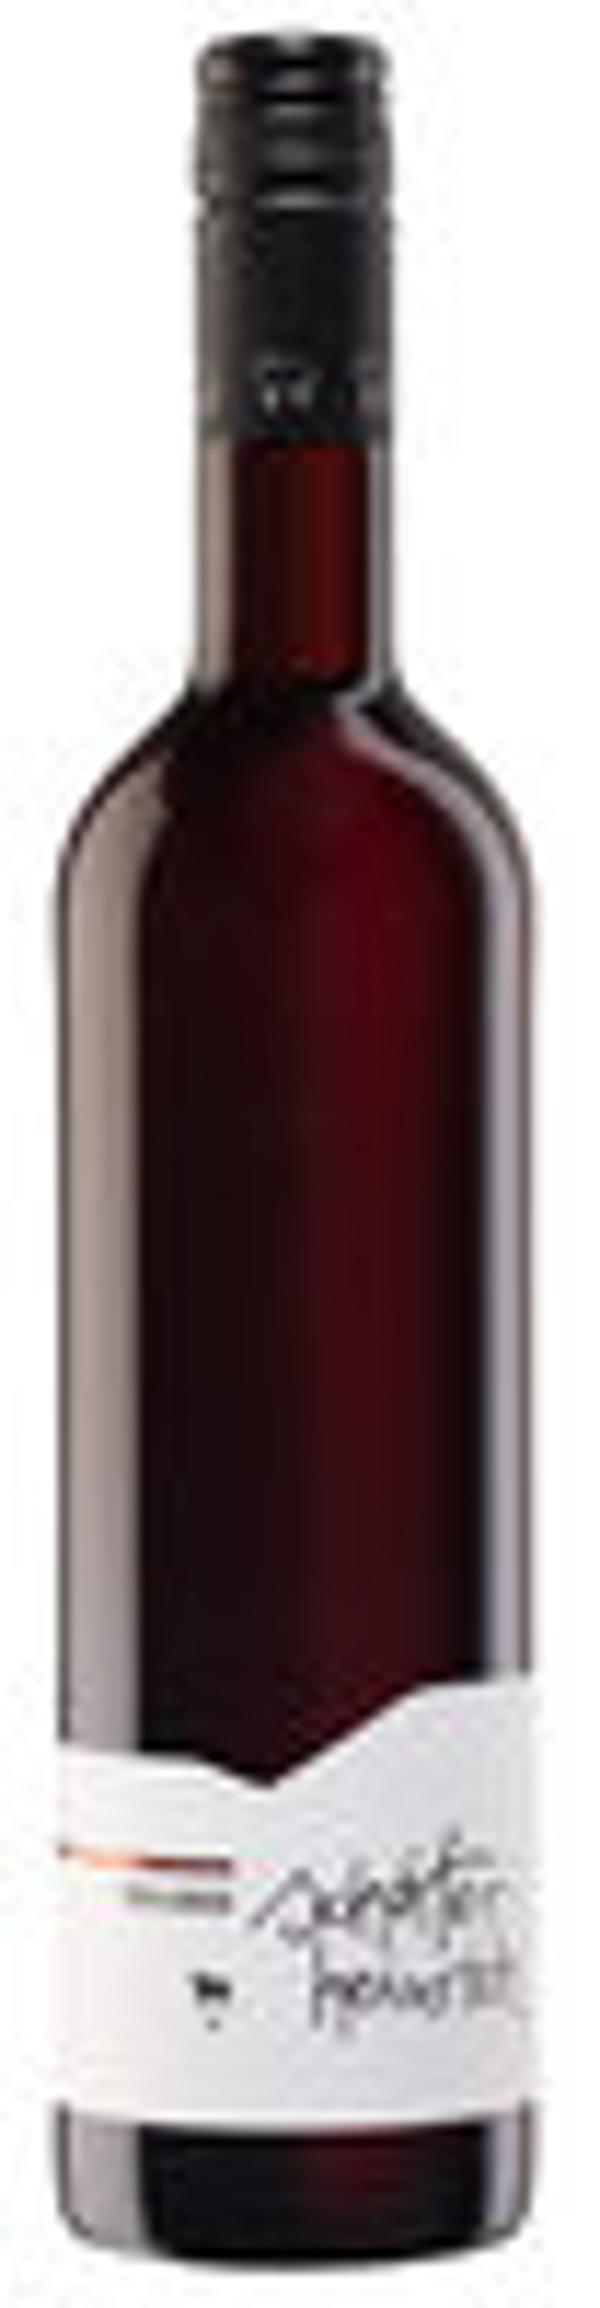 Produktfoto zu Trollinger Rotwein 6*0,75l Kiste